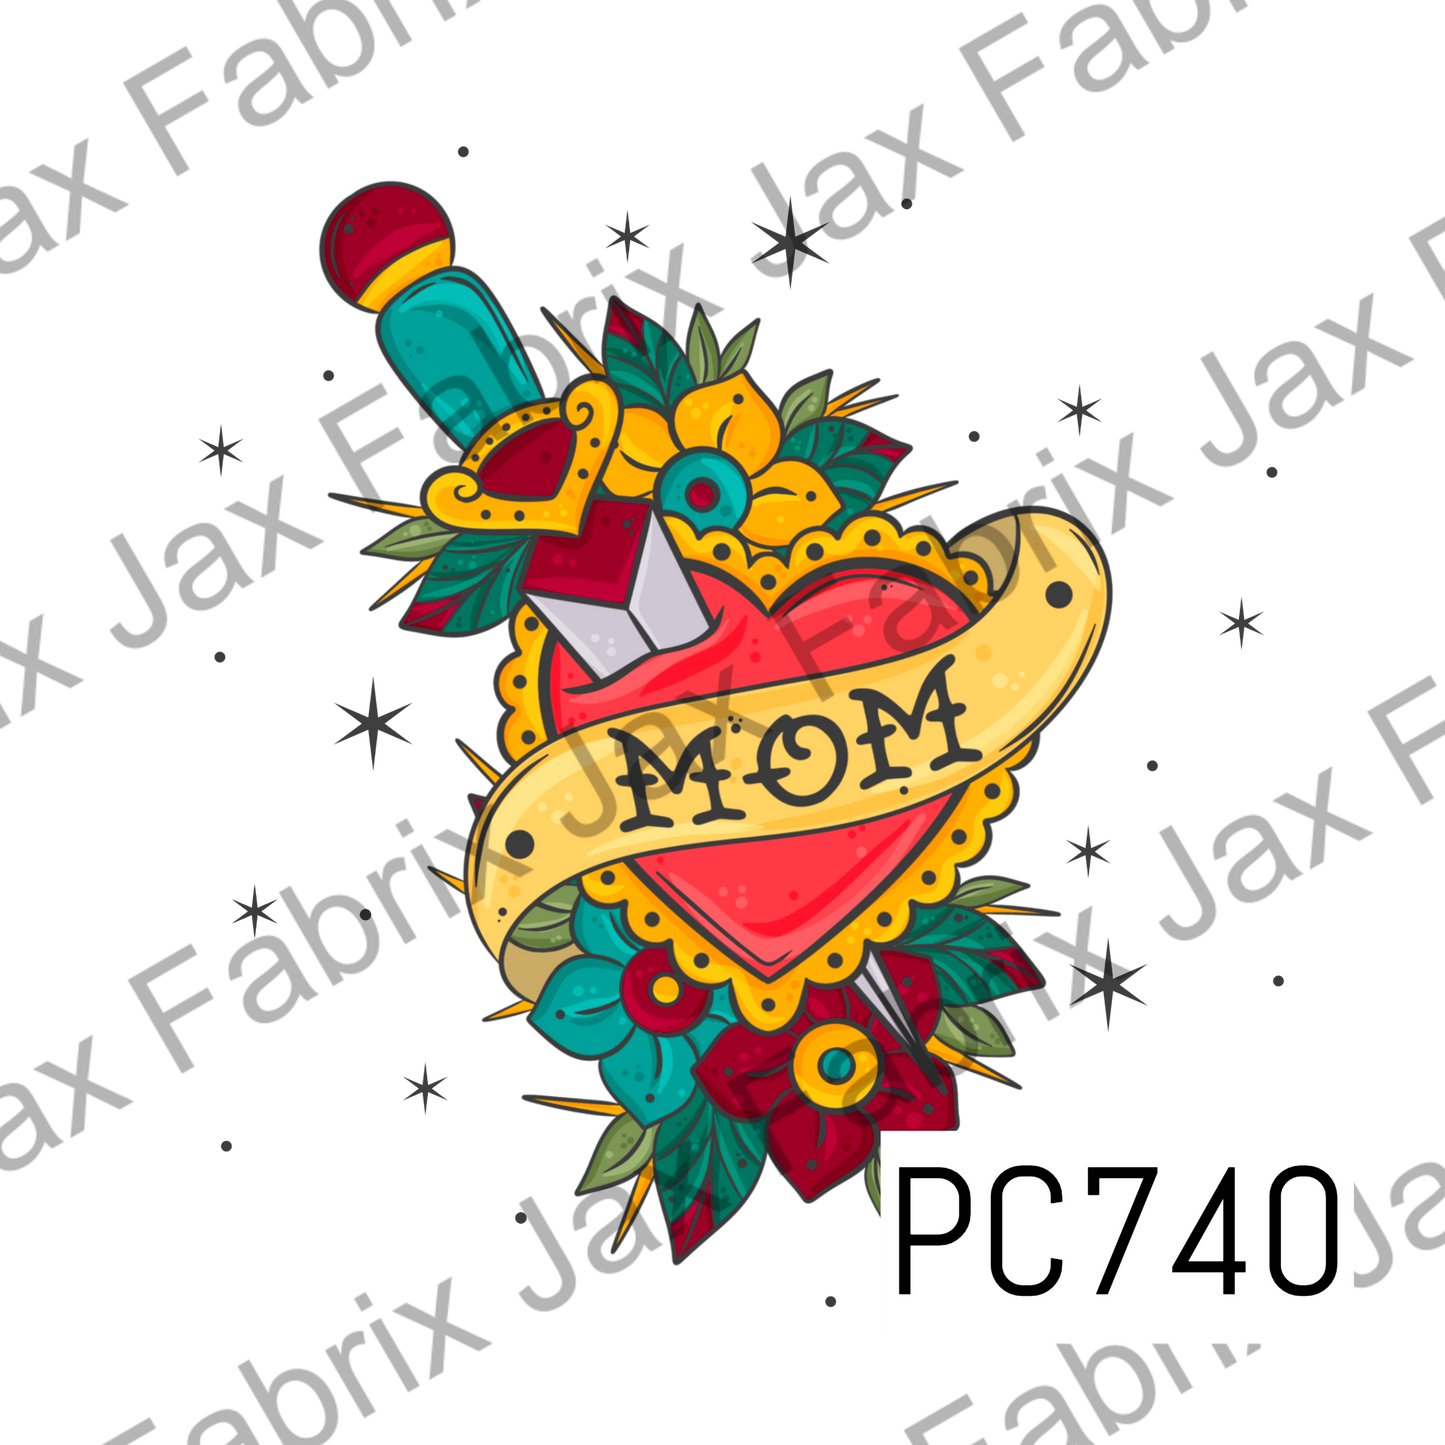 Mom Tattoo PNG PC740